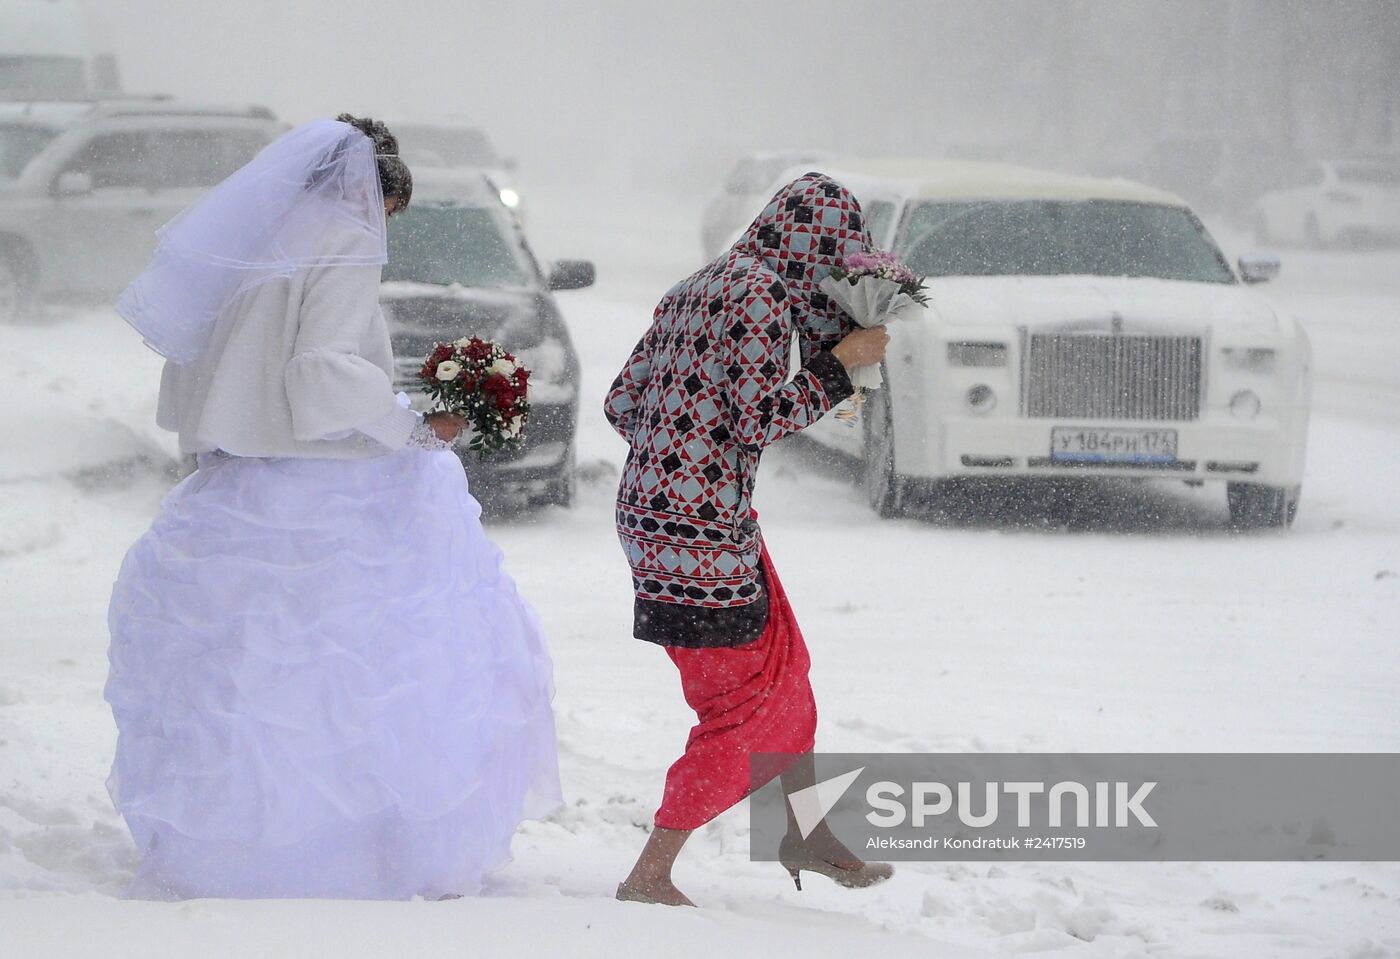 Snow blizzard hits Yekaterinburg